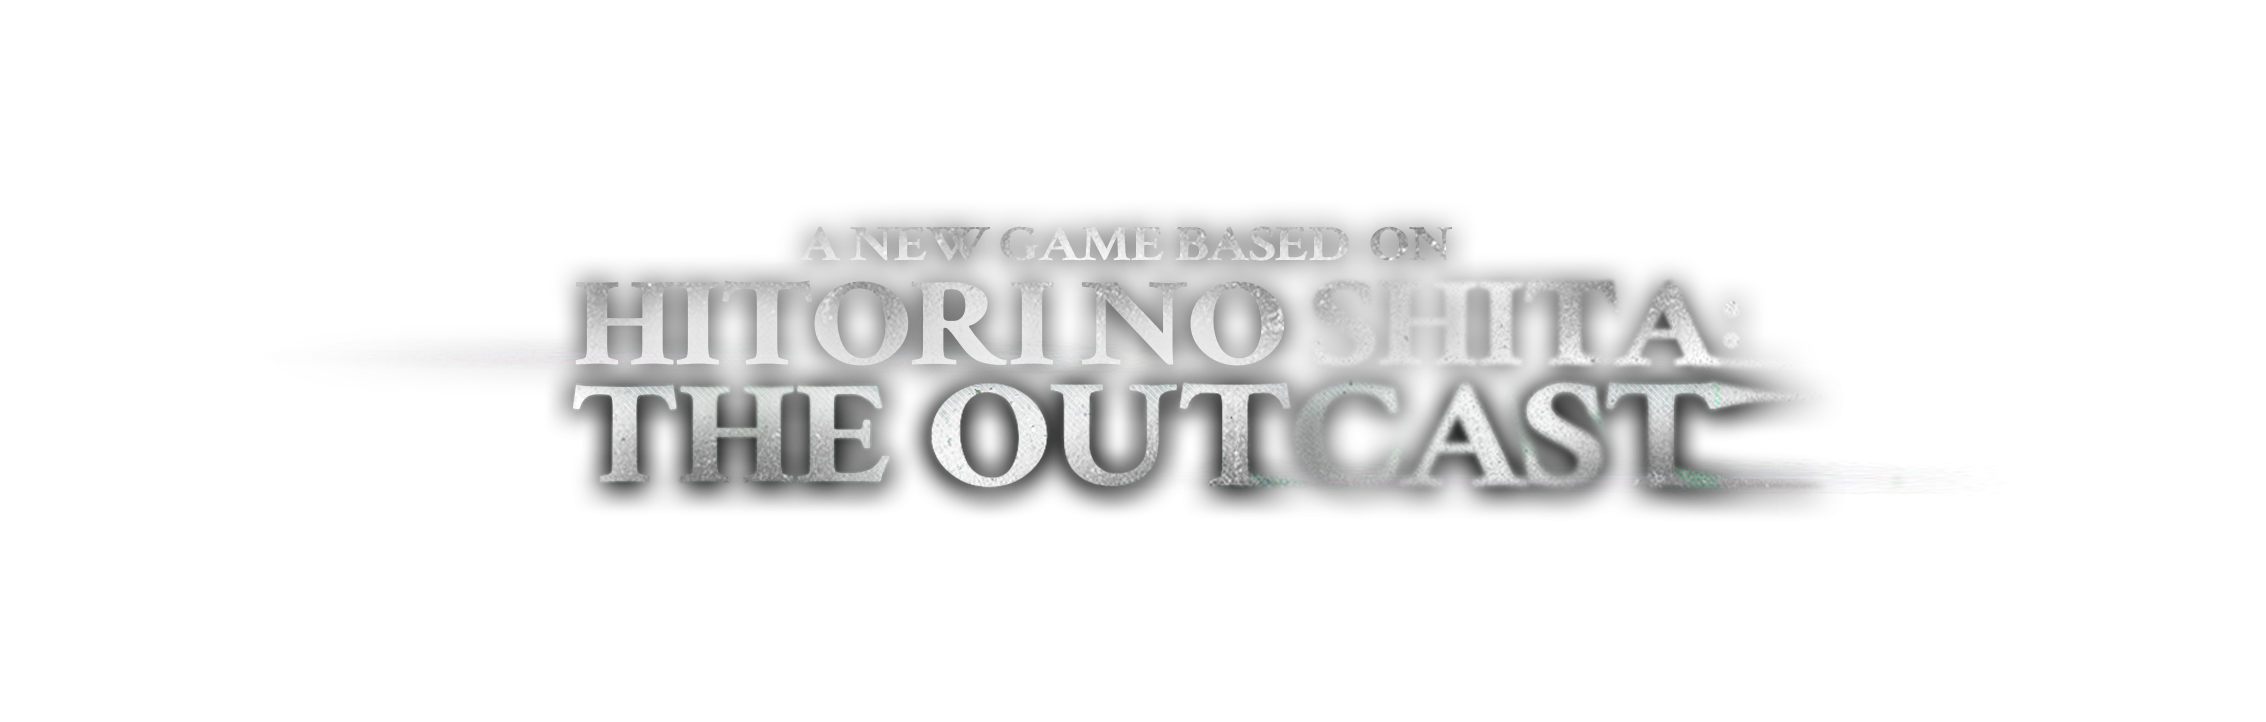 Hitori No Shita: The Outcast, Official Gameplay Trailer